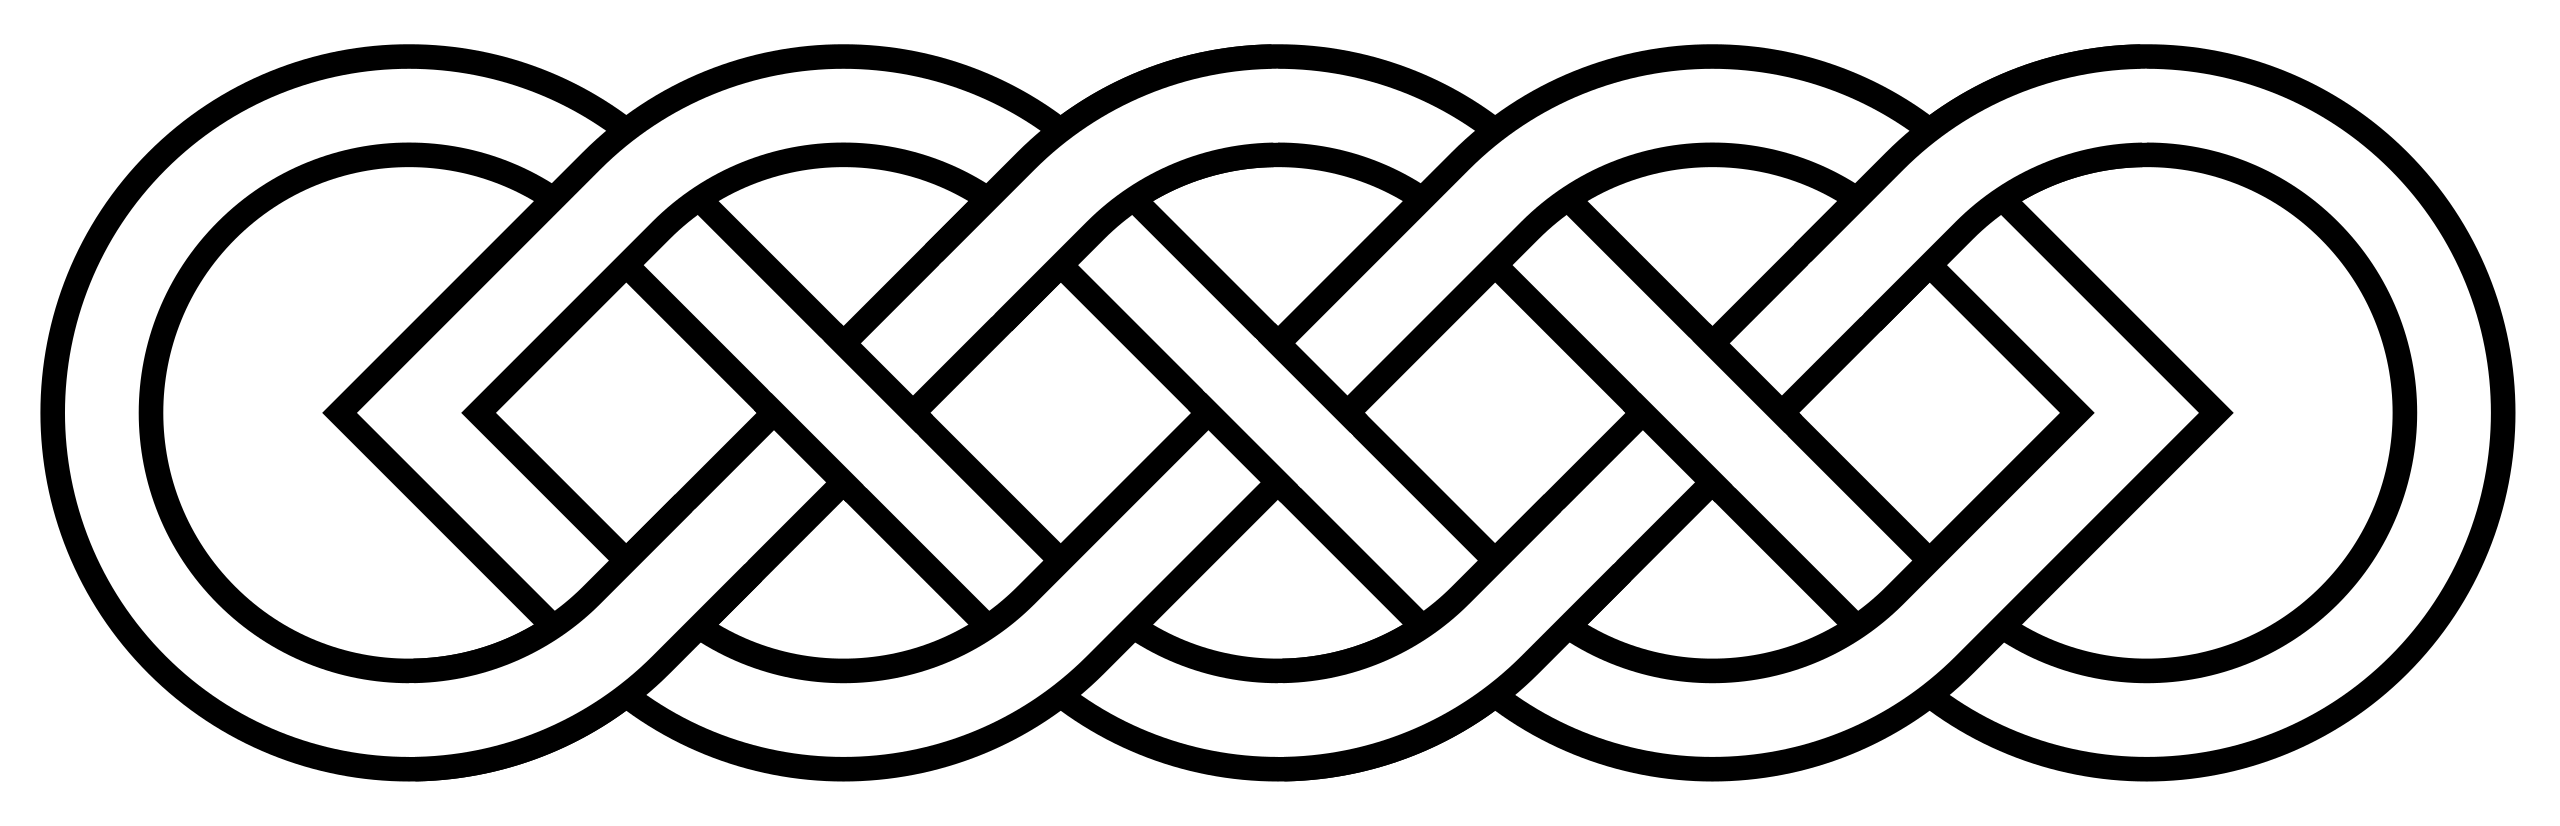 https://upload.wikimedia.org/wikipedia/commons/thumb/0/05/Celtic-knot-basic.svg/2560px-Celtic-knot-basic.svg.png